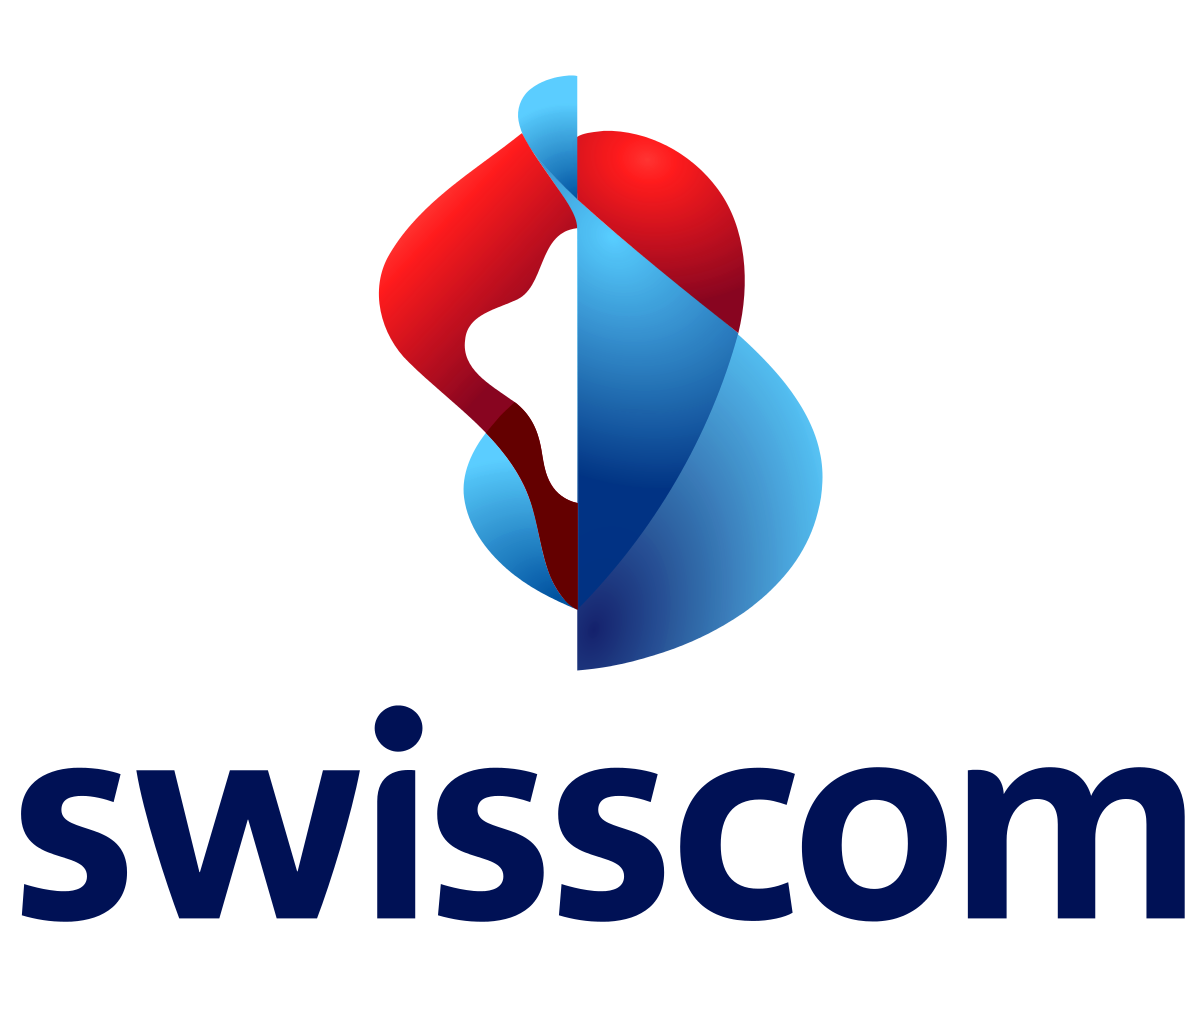 Swisscom-logo-and-wordmark.png